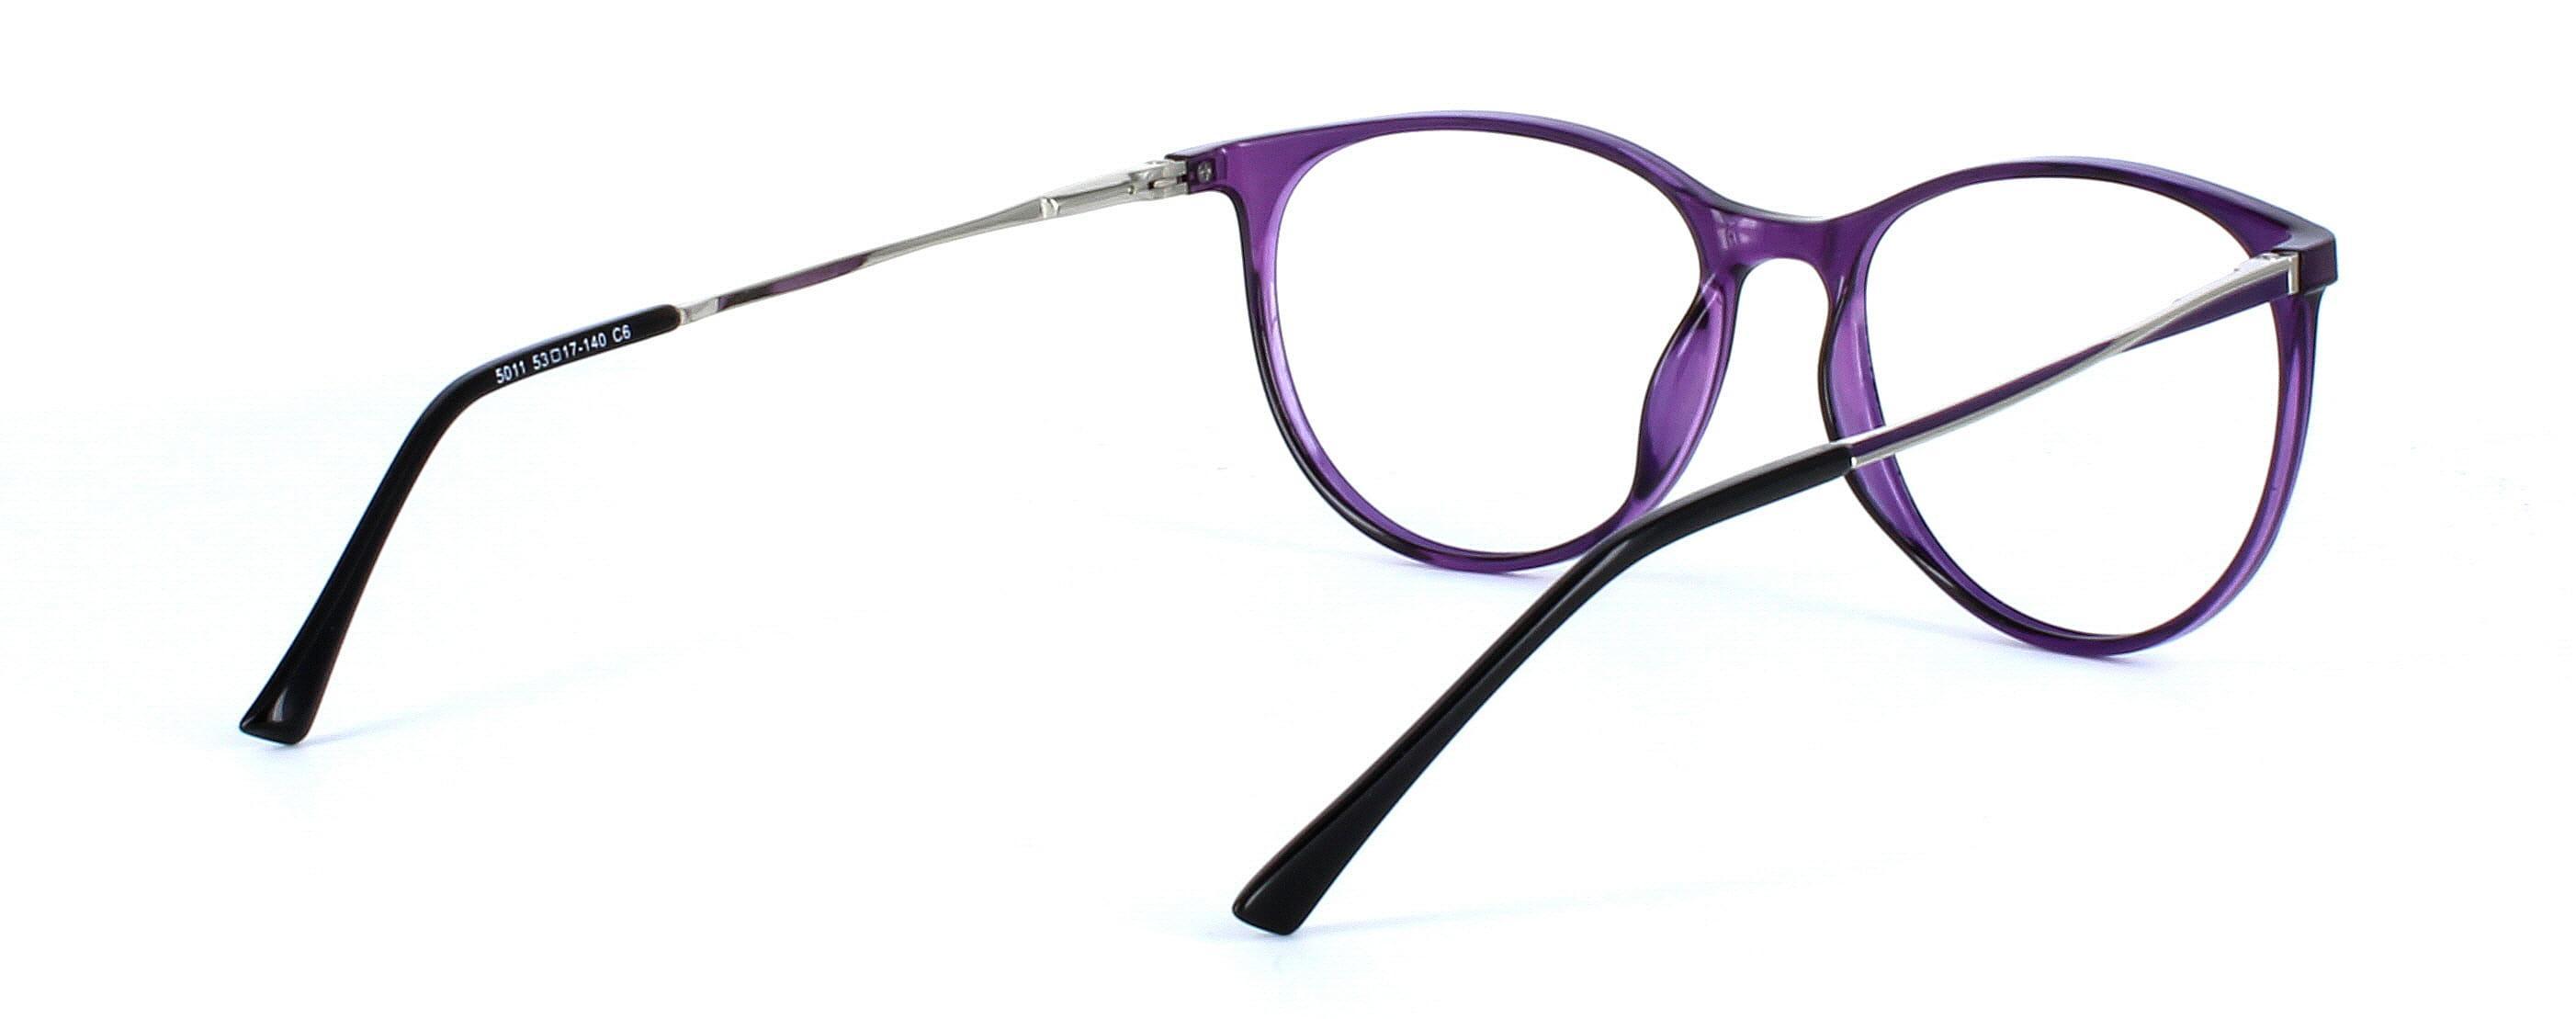 Aquila - Ladies plastic glasses frame in purple - image view 4